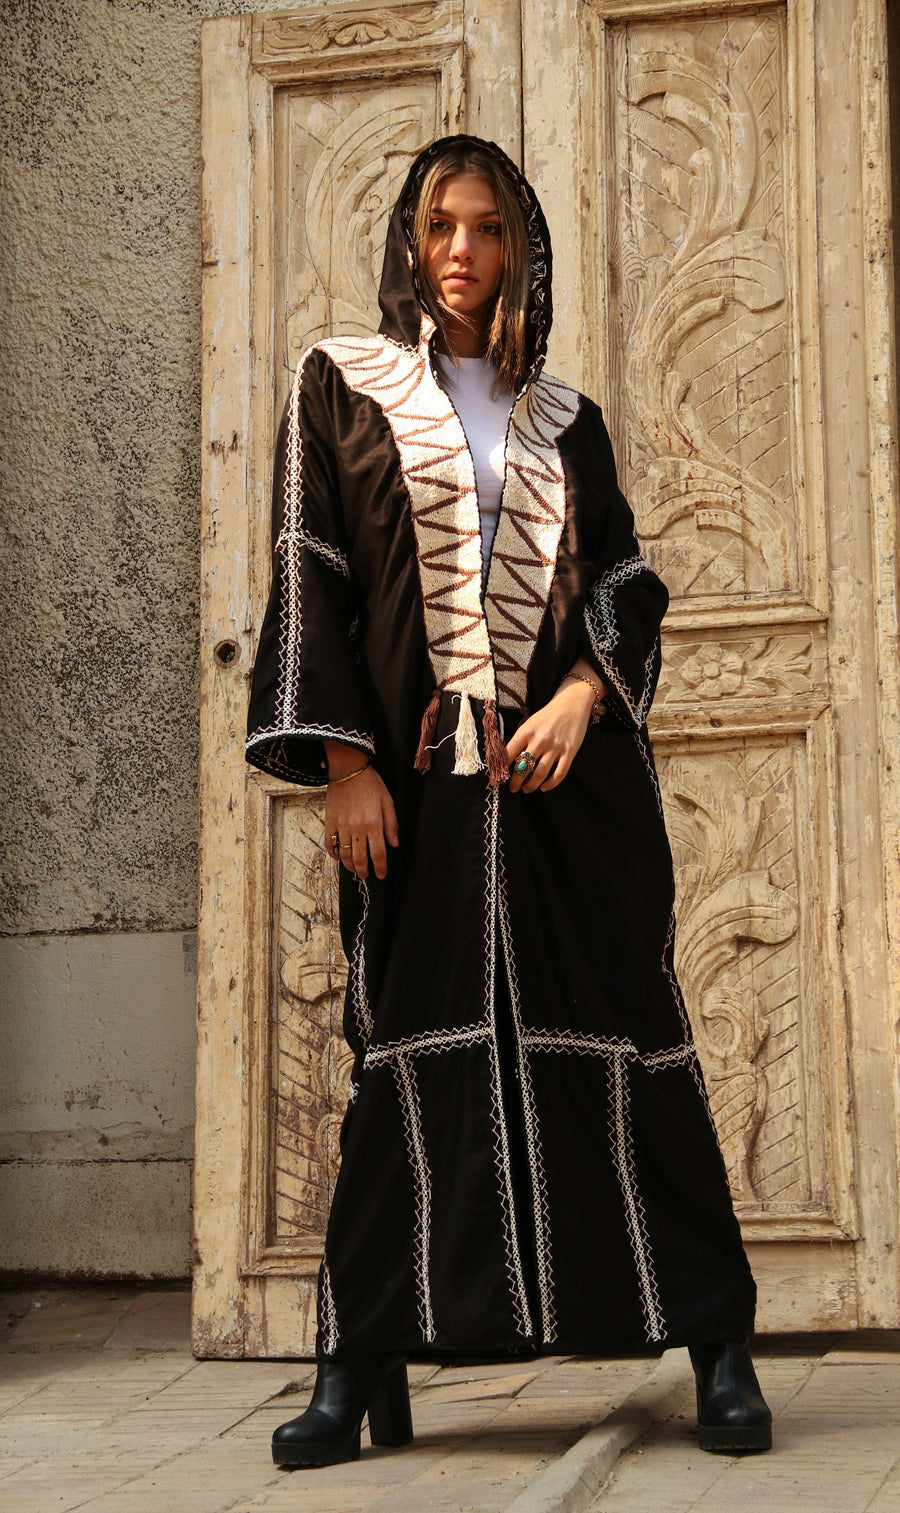 Bedouin hooded hand embroidered Kimono, Black Cotton embroidered coat, Bohemian winter Kimono, Long black coat, Siwa Kimono, Wool cloak